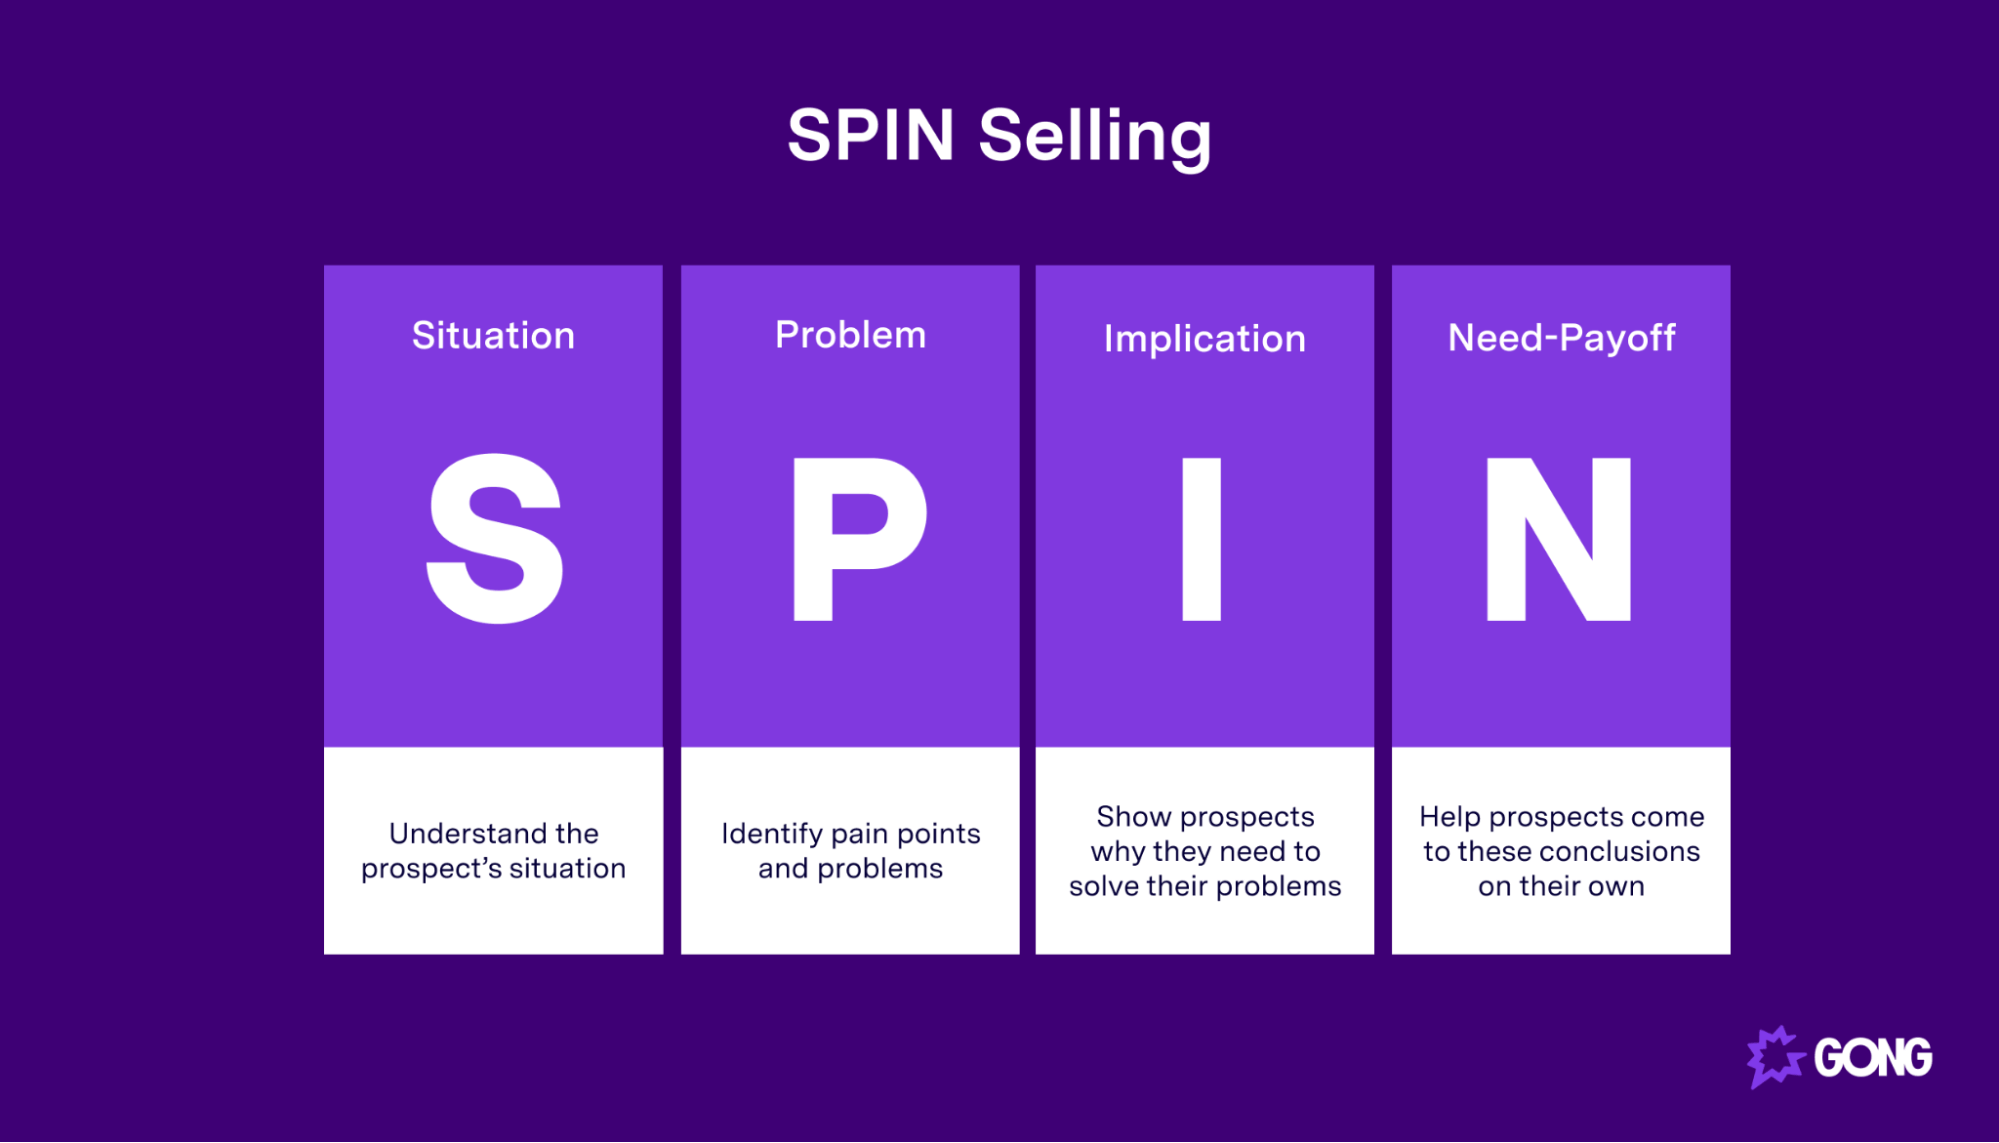 SPIN Selling methodology